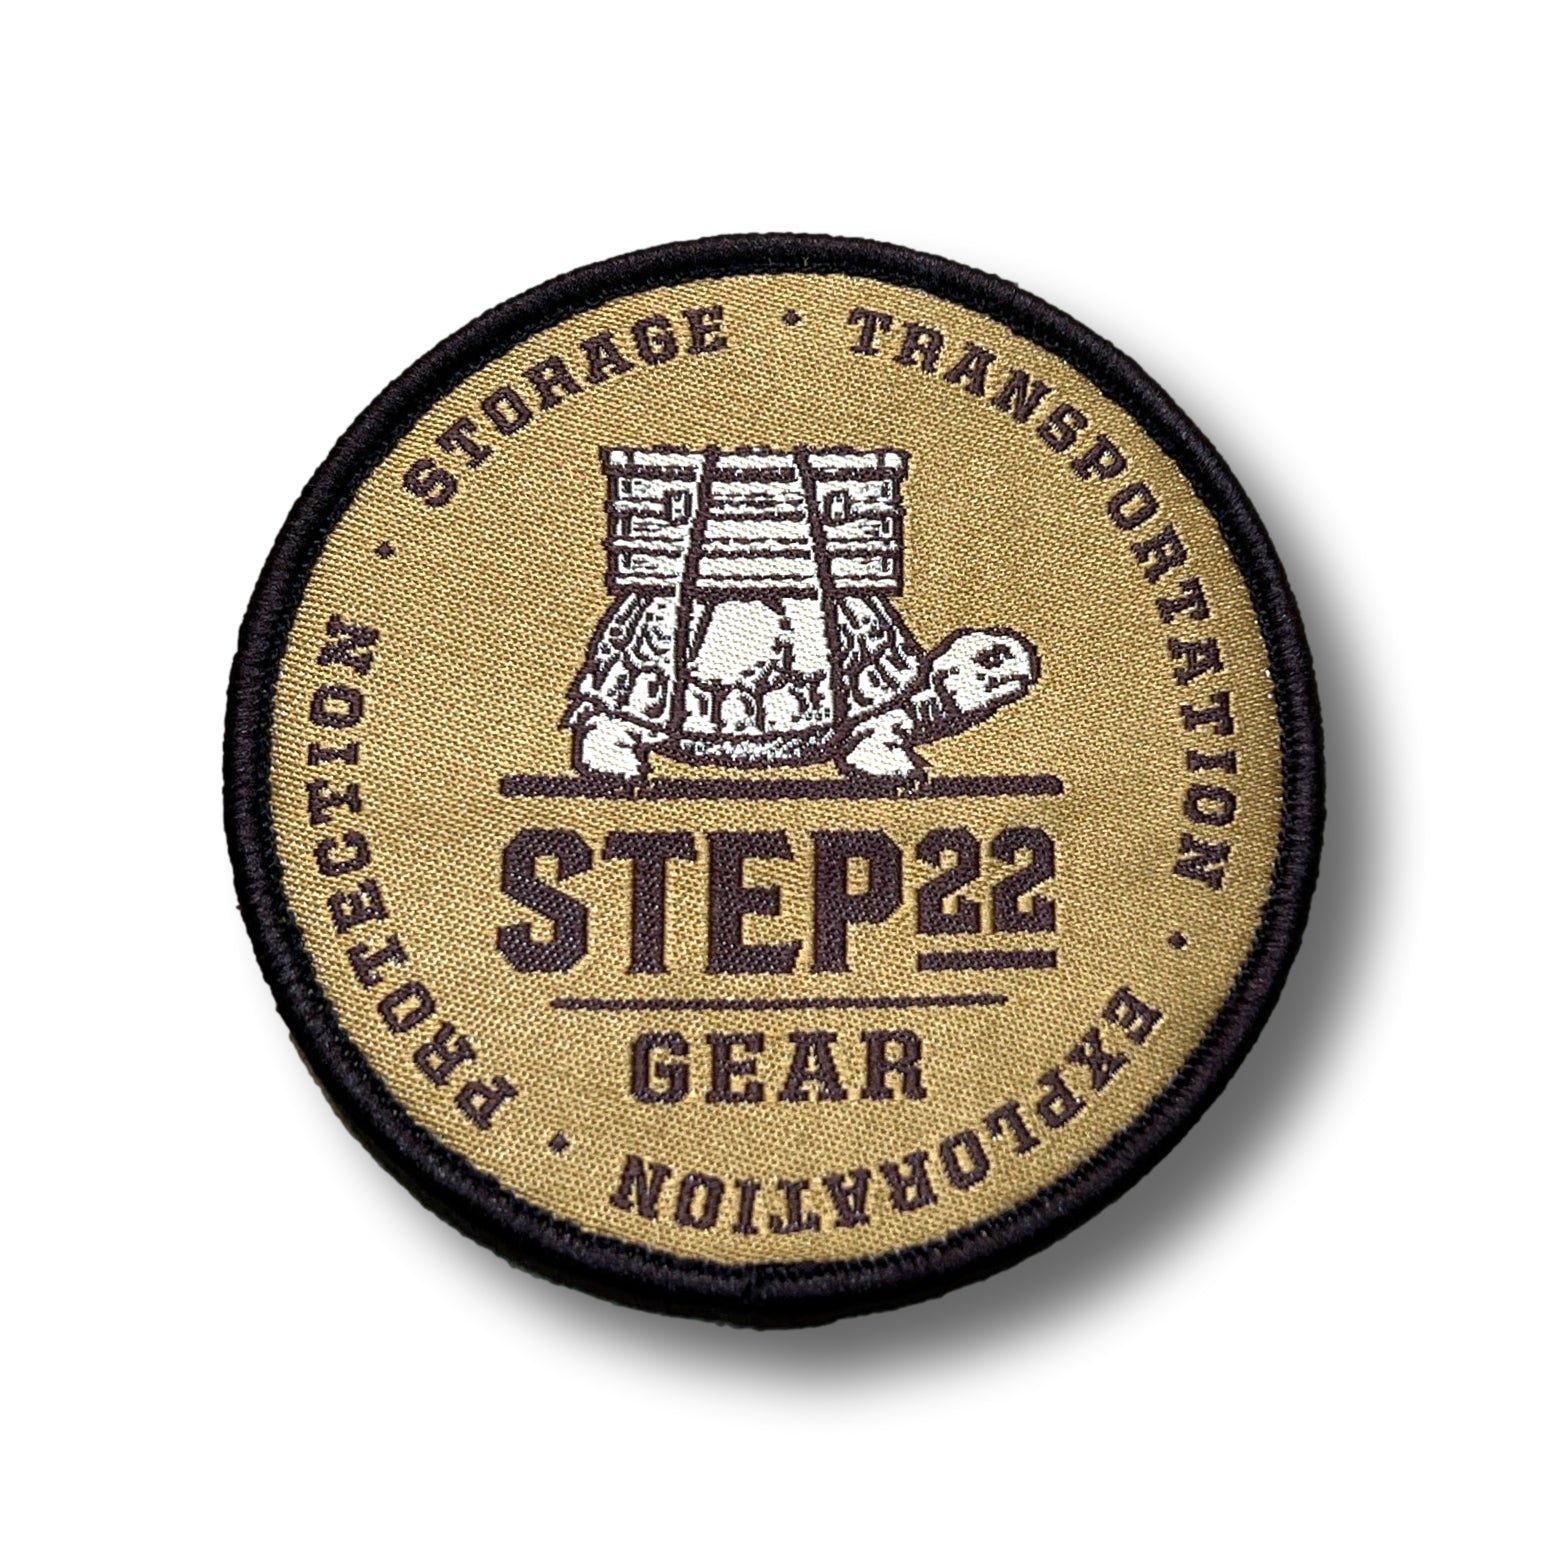 STEP 22 Gear Round Tortoise Logo Patch